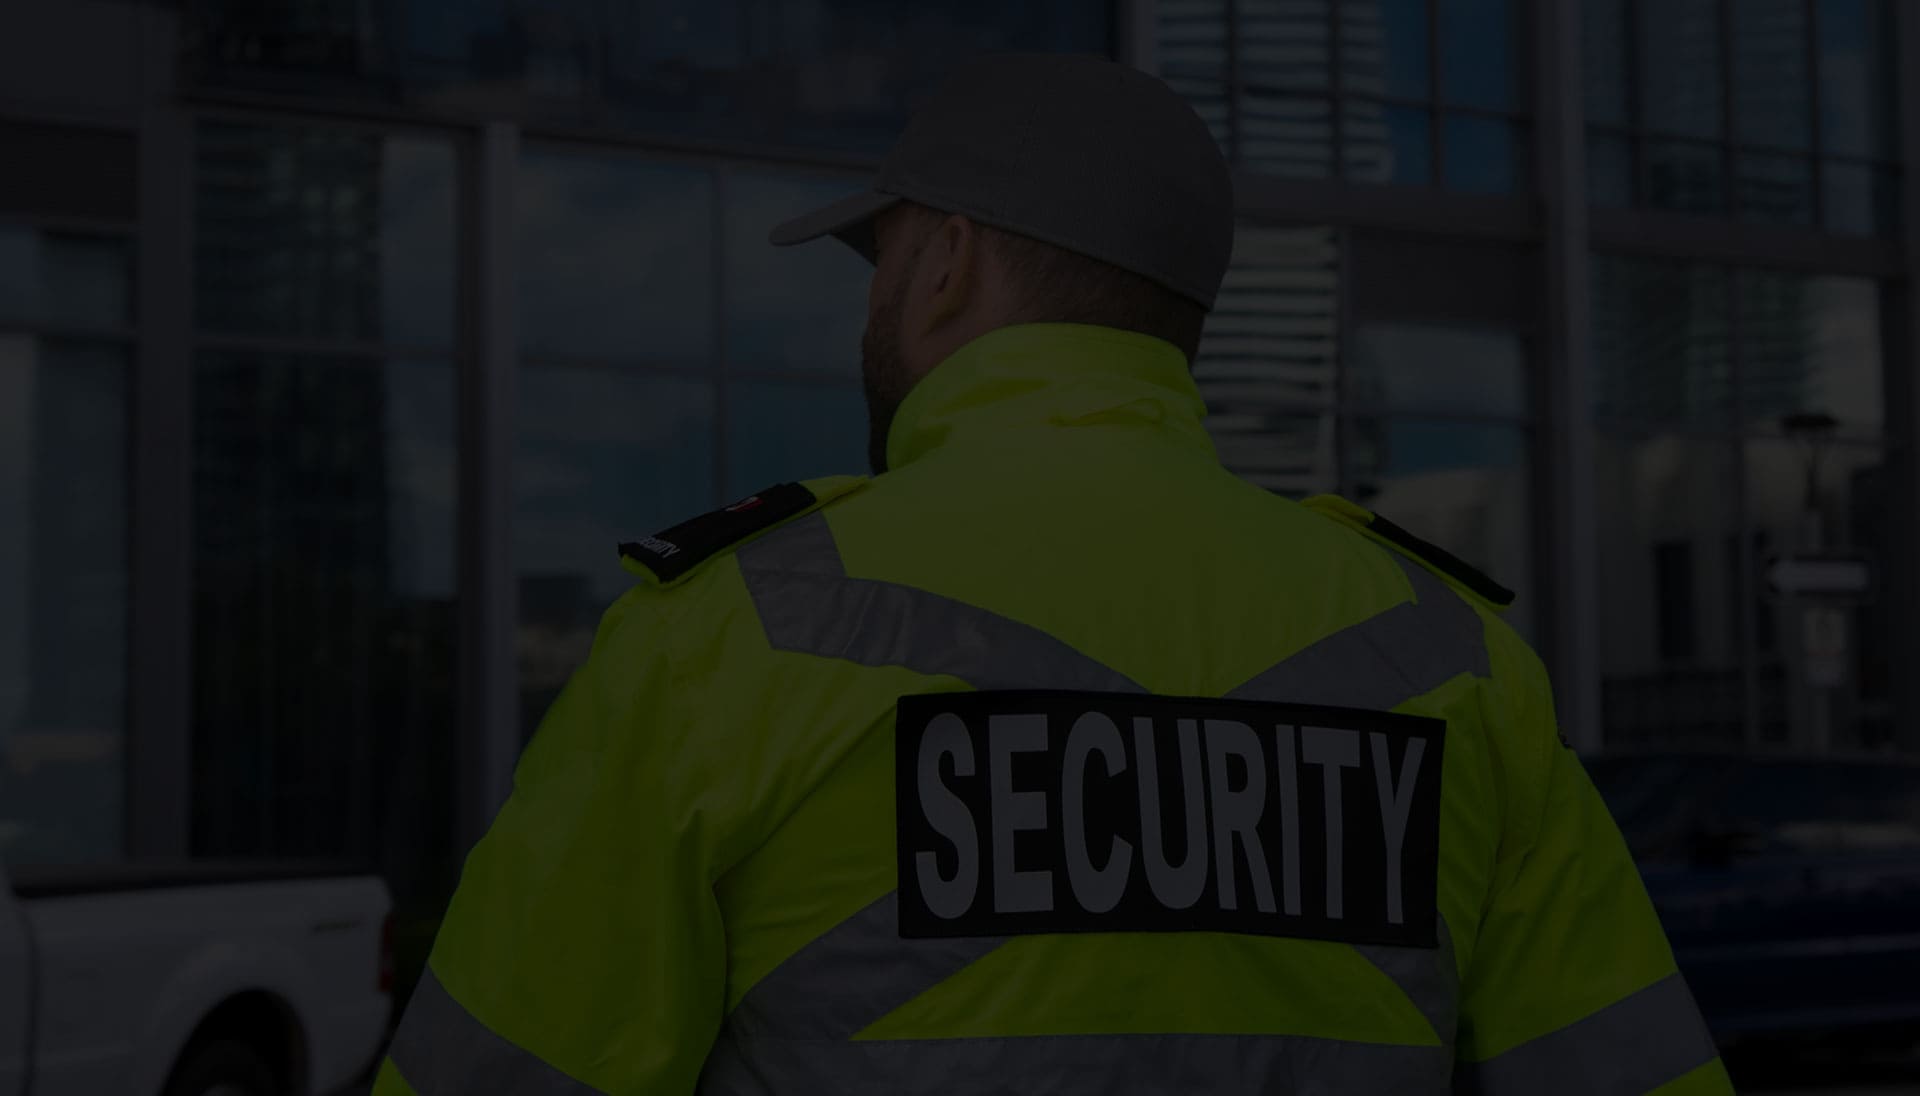 security guard course image